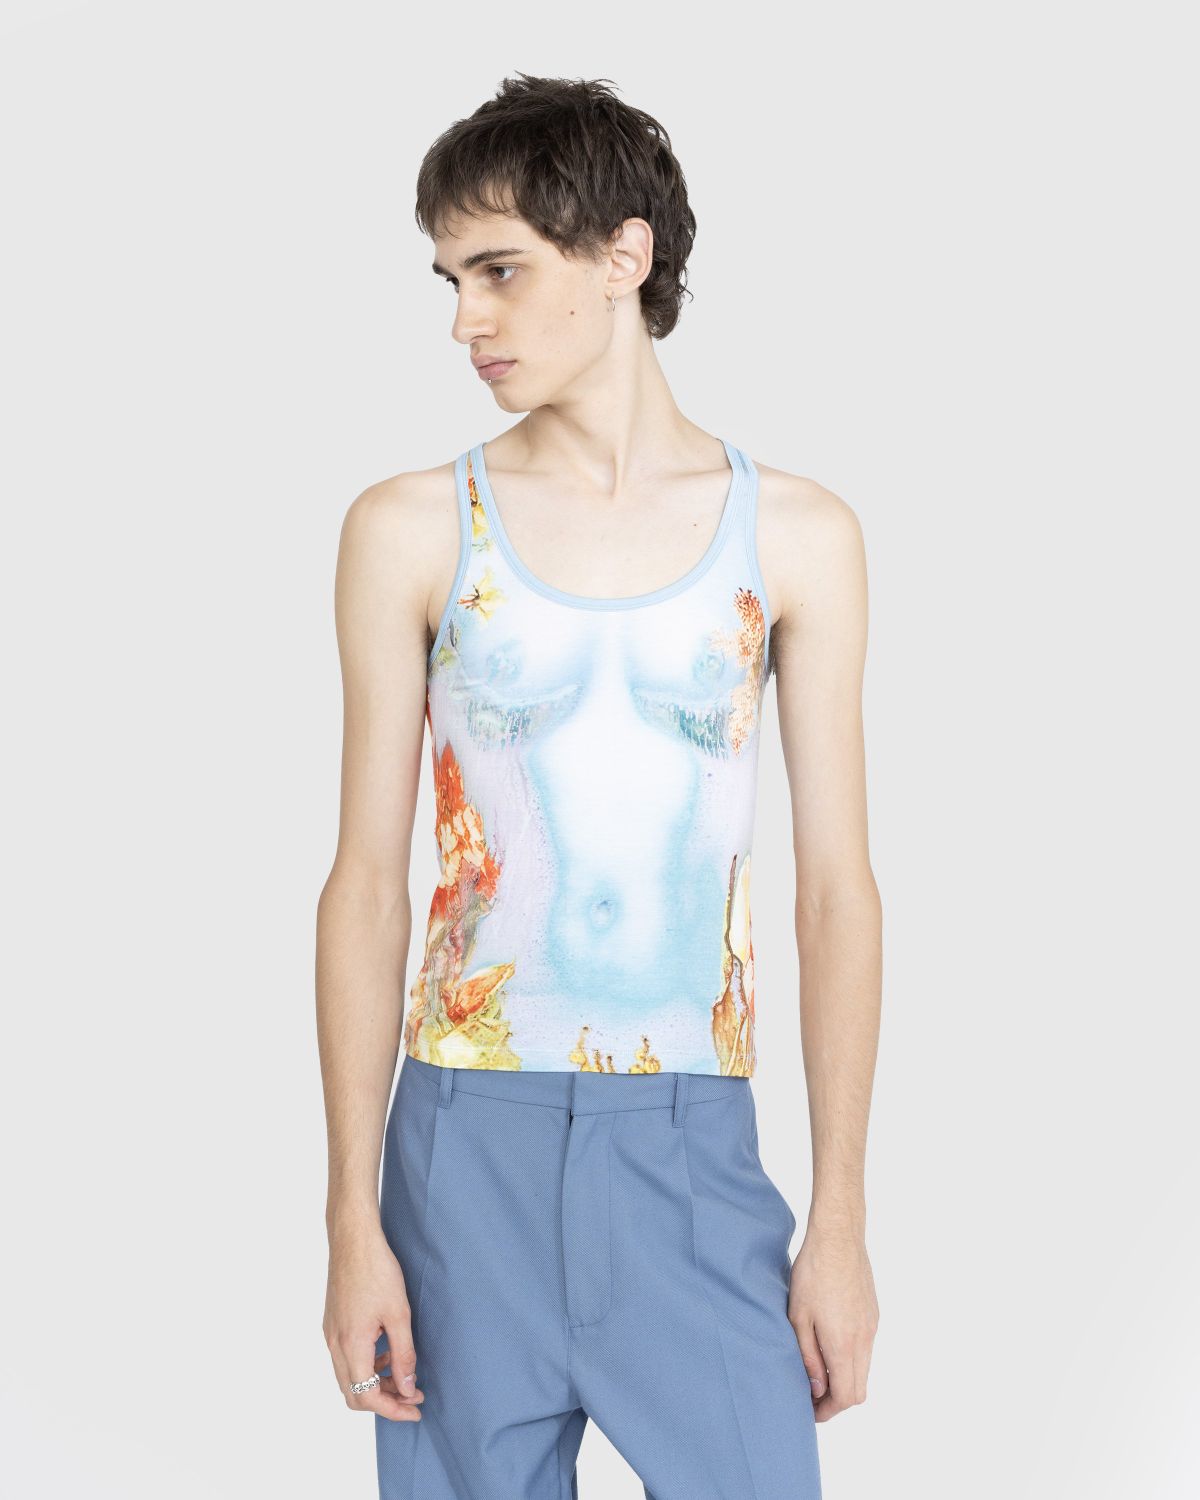 Jean Paul Gaultier – Printed Body Flowers Tank Top Blue